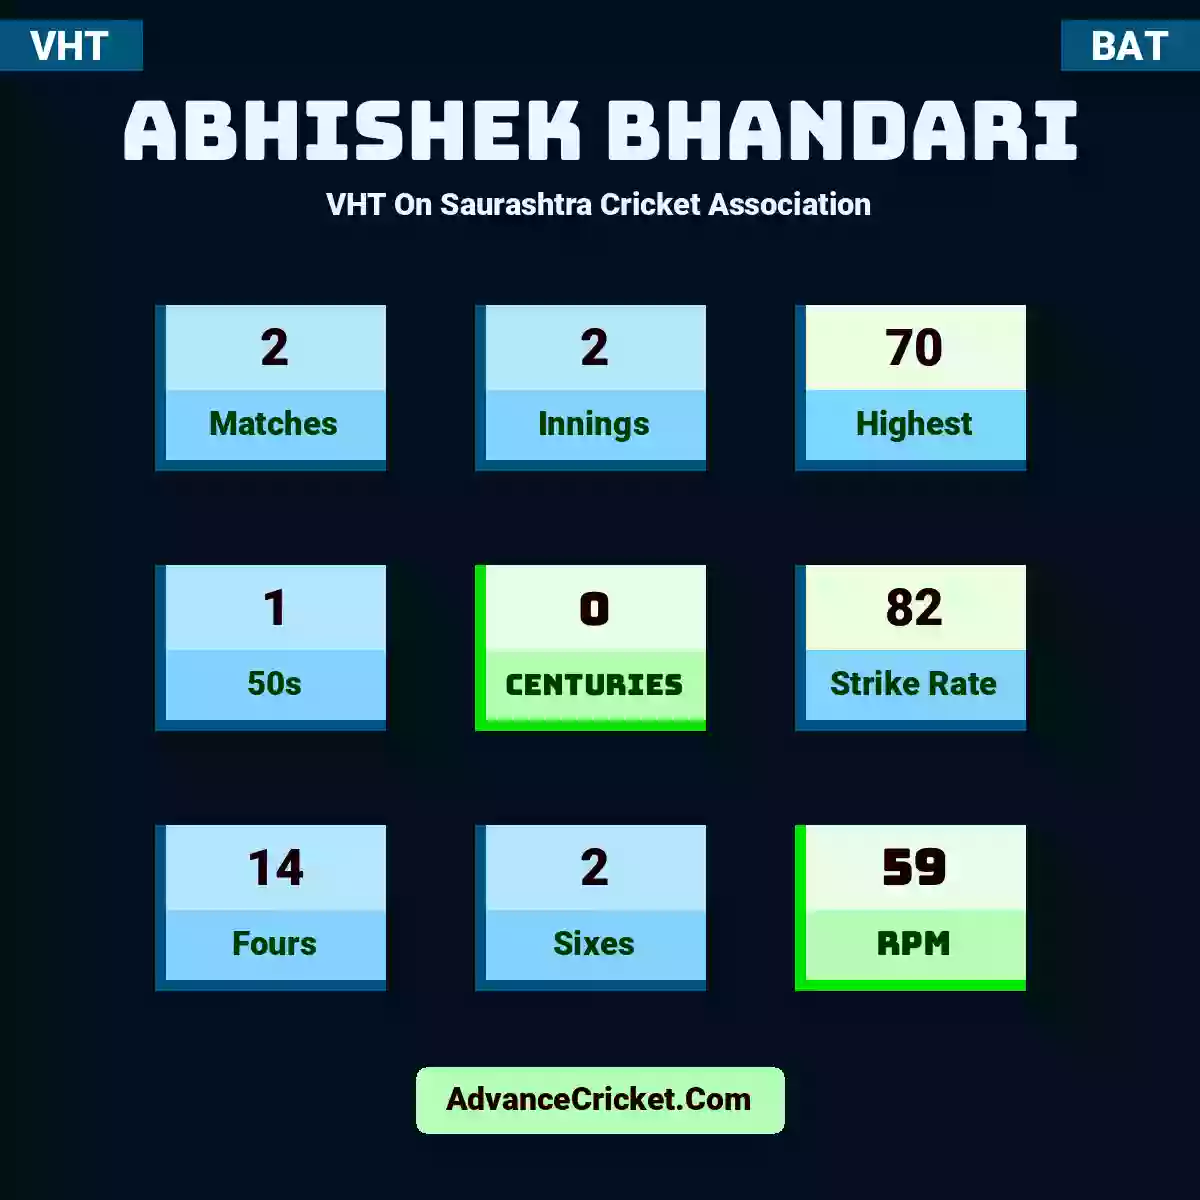 Abhishek Bhandari VHT  On Saurashtra Cricket Association, Abhishek Bhandari played 1 matches, scored 106 runs as highest, 0 half-centuries, and 1 centuries, with a strike rate of 93. A.Bhandari hit 13 fours and 3 sixes, with an RPM of 106.